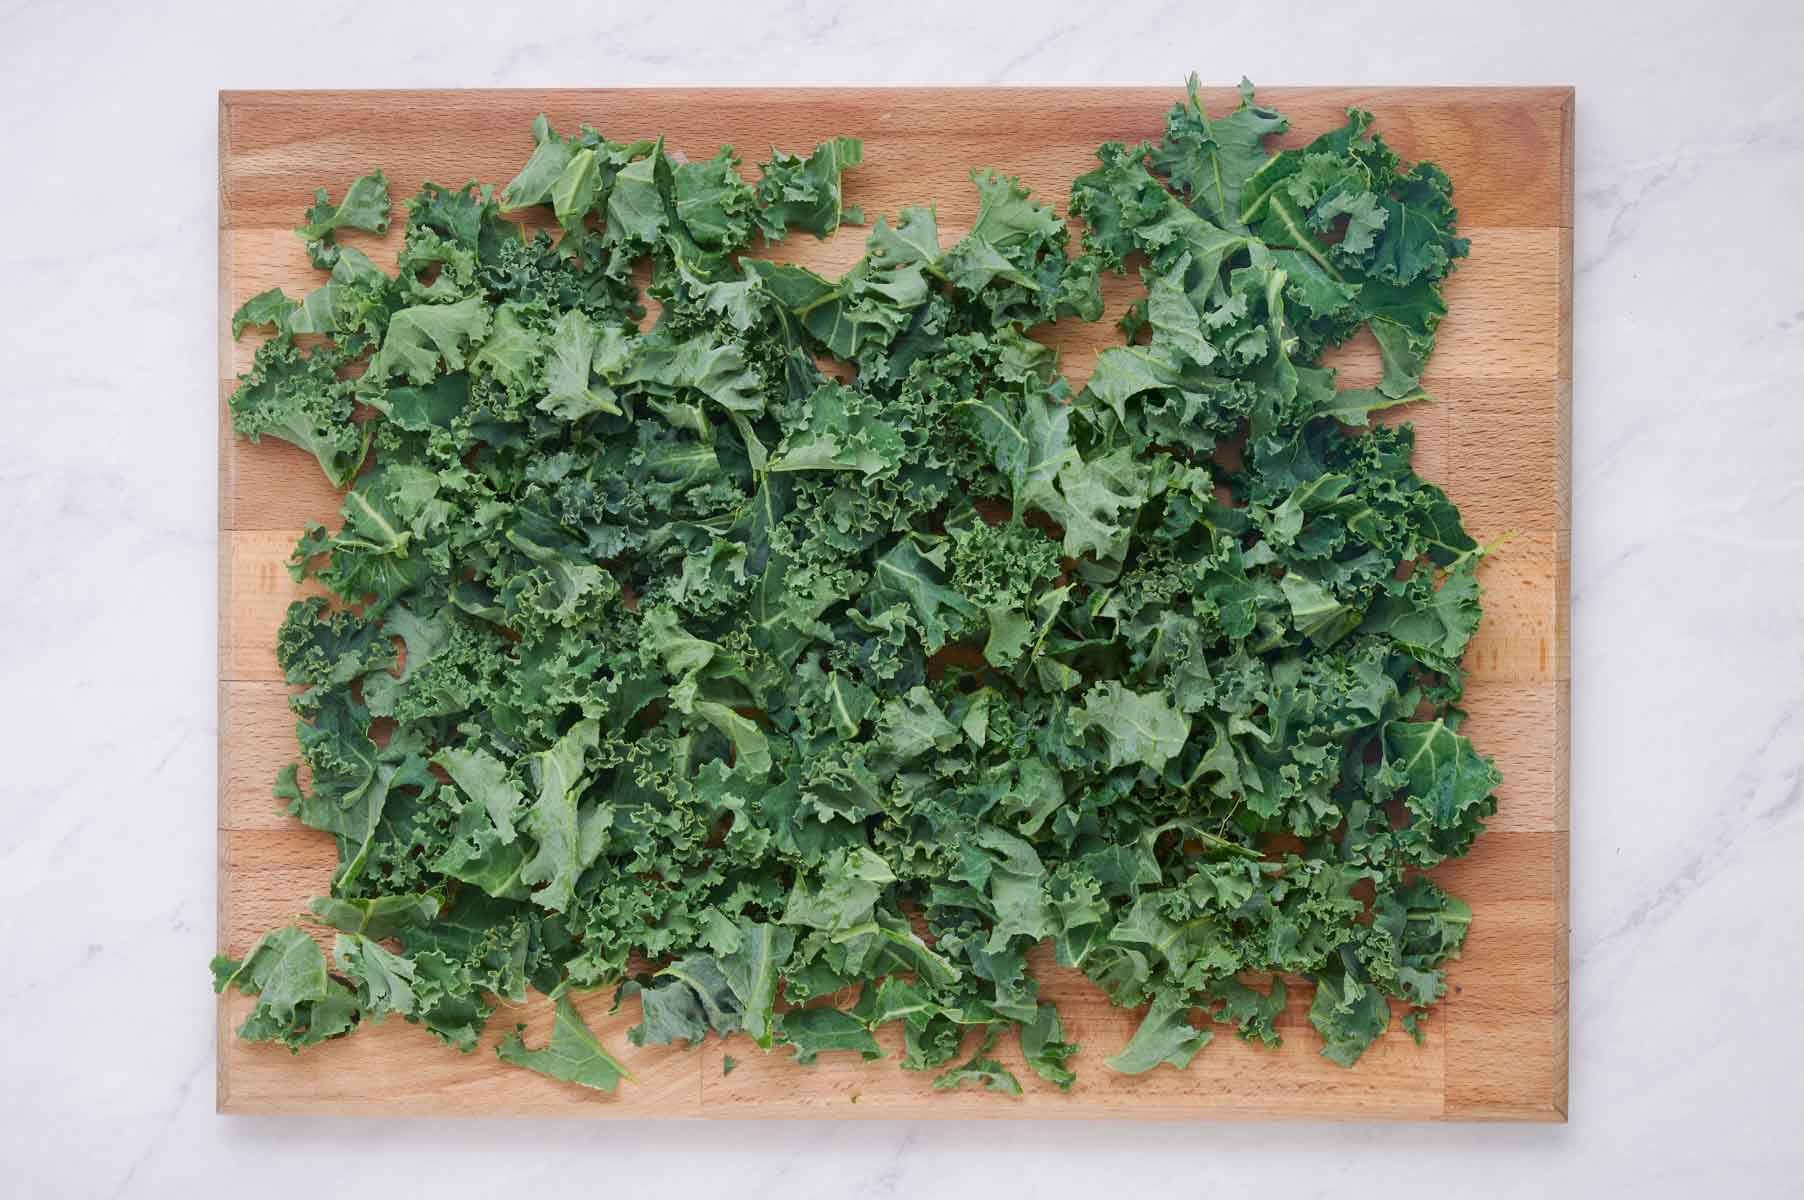 A cutting board is full of chopped kale.